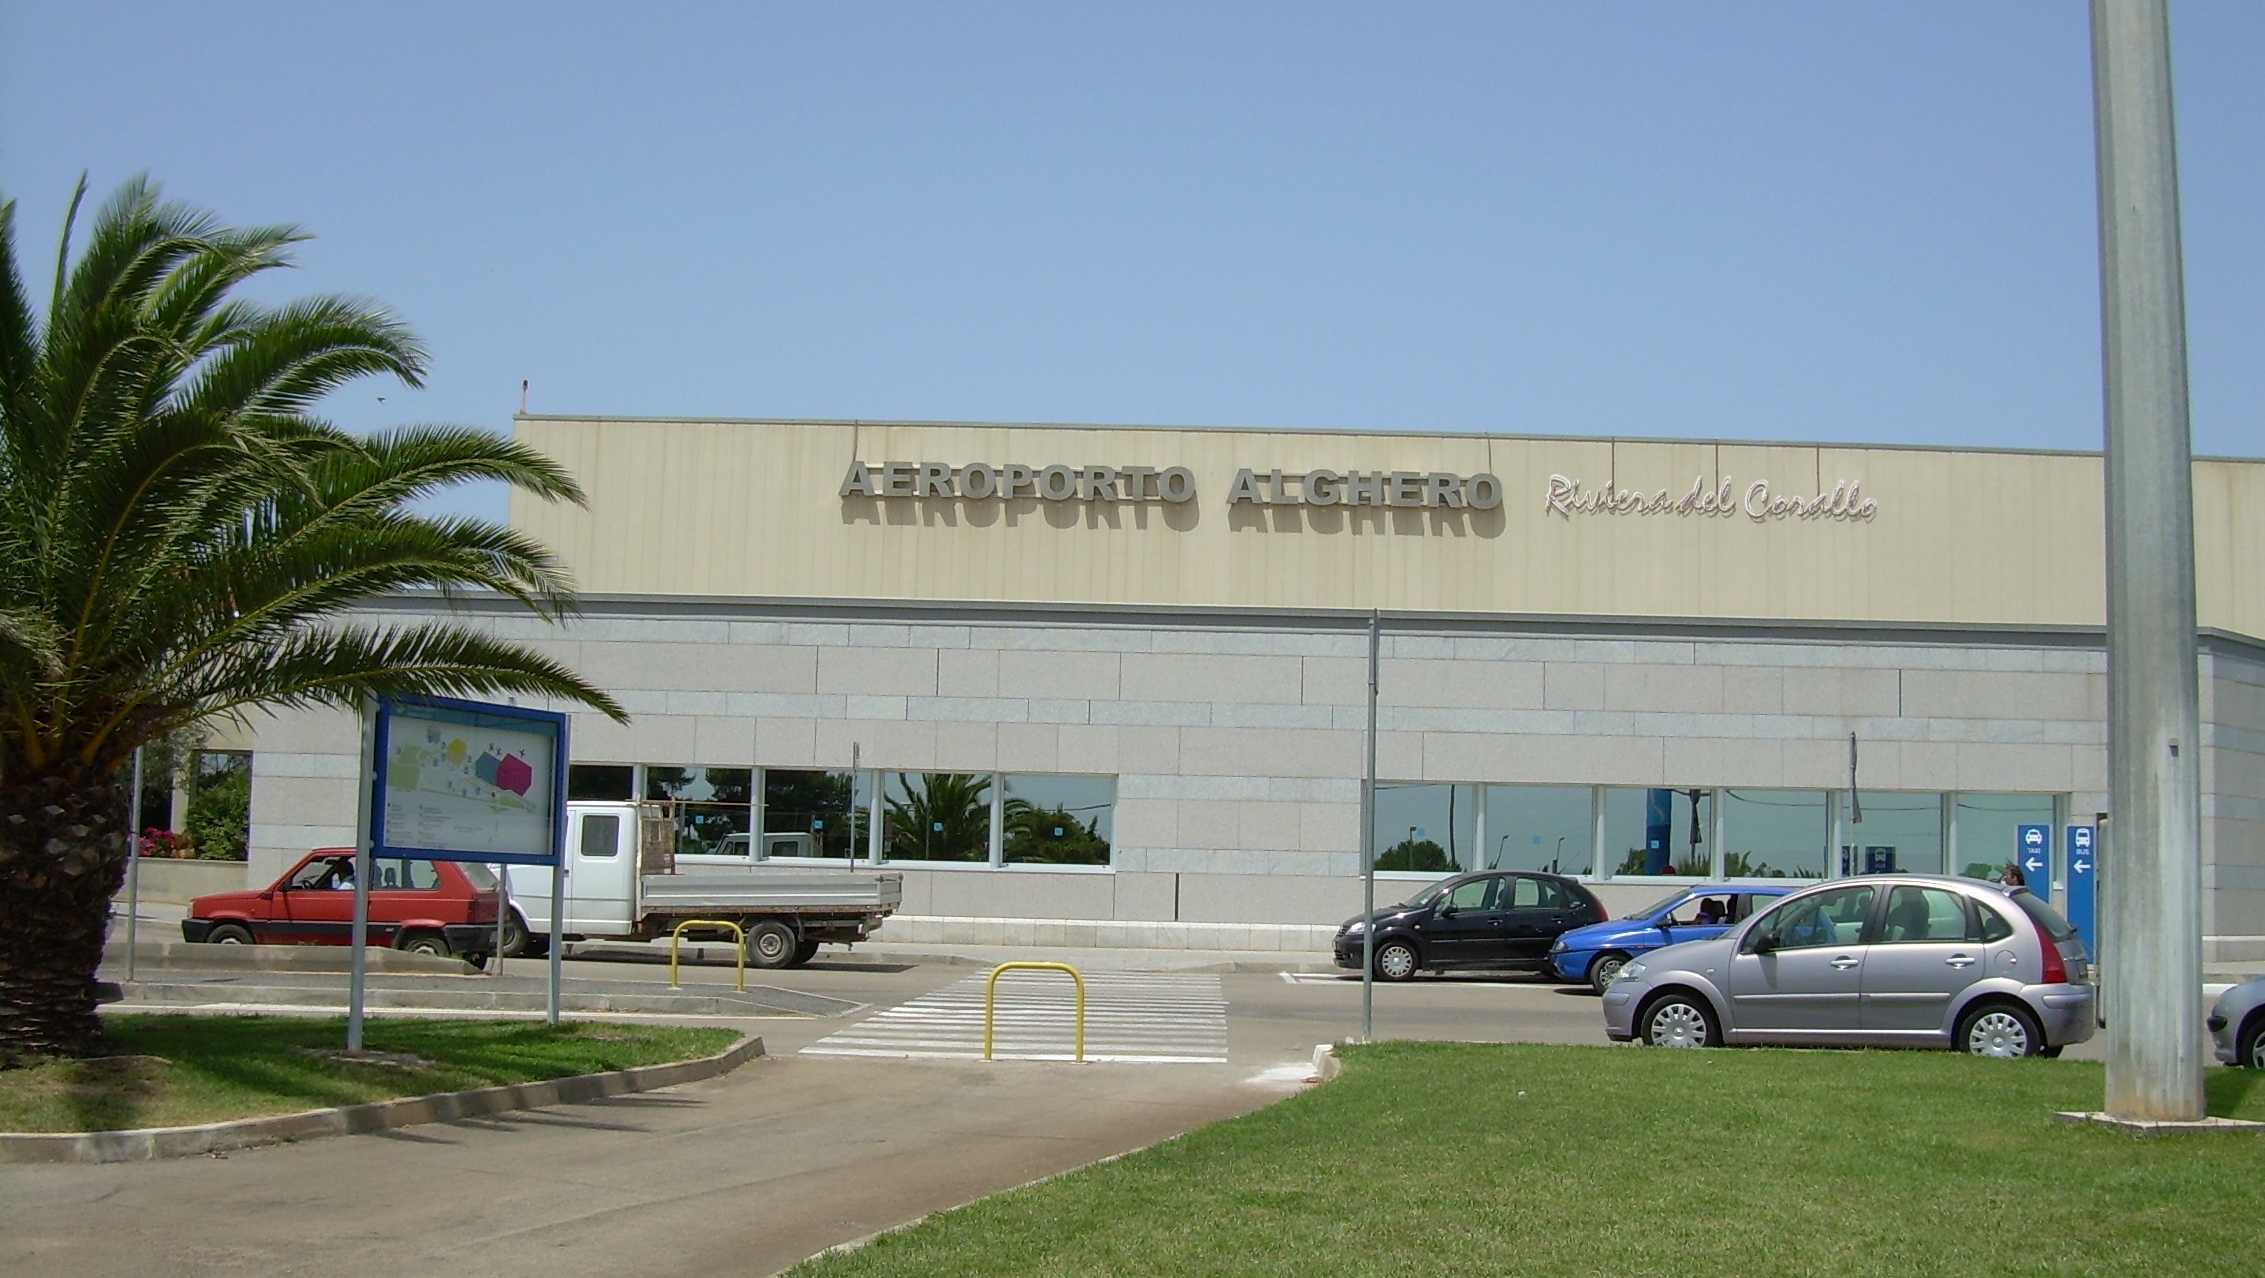 Alghero Airport building